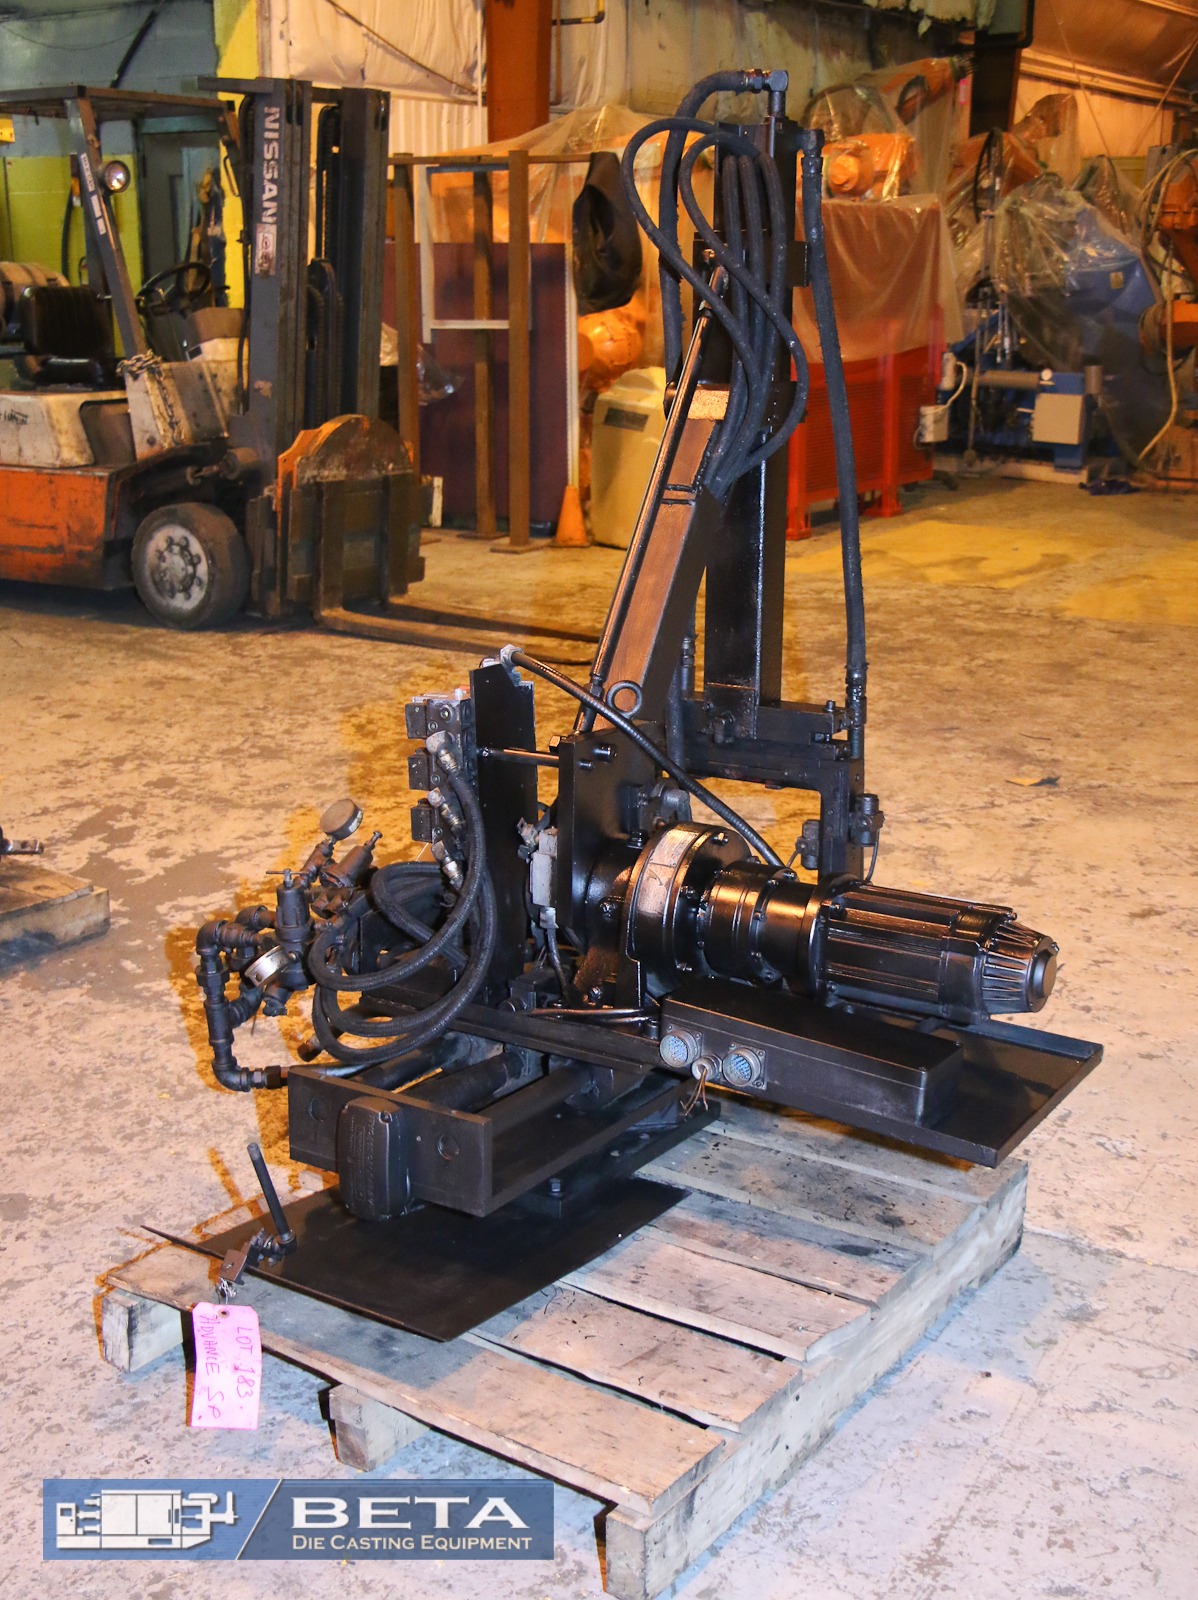 Imagen detallada del pulverizador Advance usado para fundición a presión